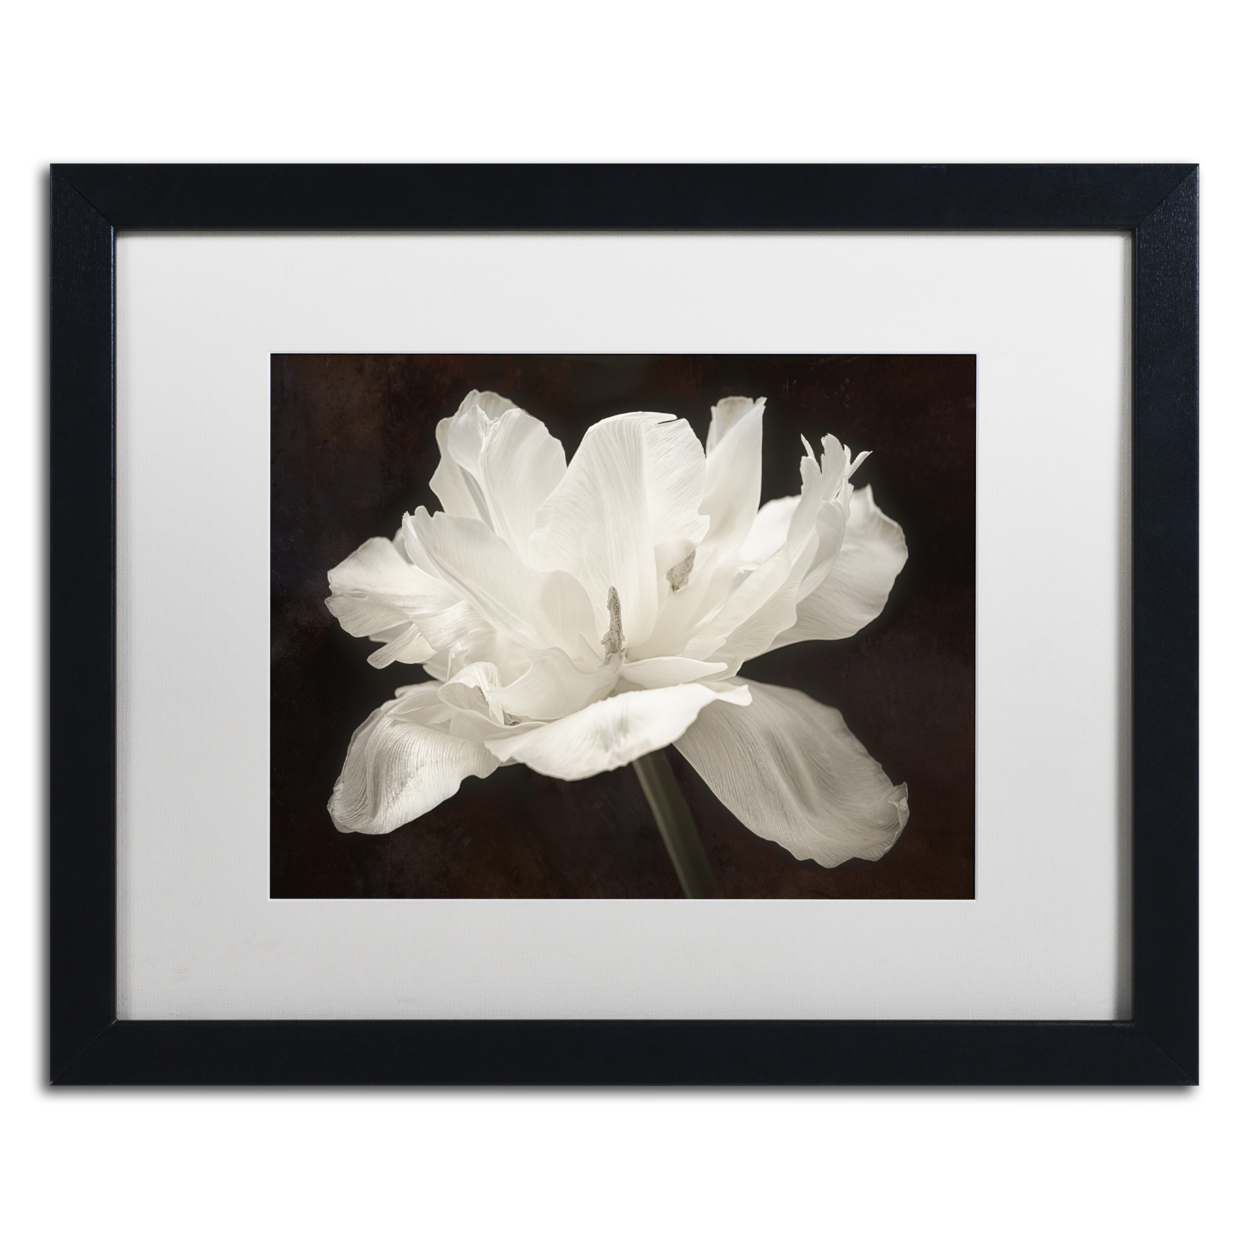 Cora Niele 'White Tulip I' Black Wooden Framed Art 18 X 22 Inches